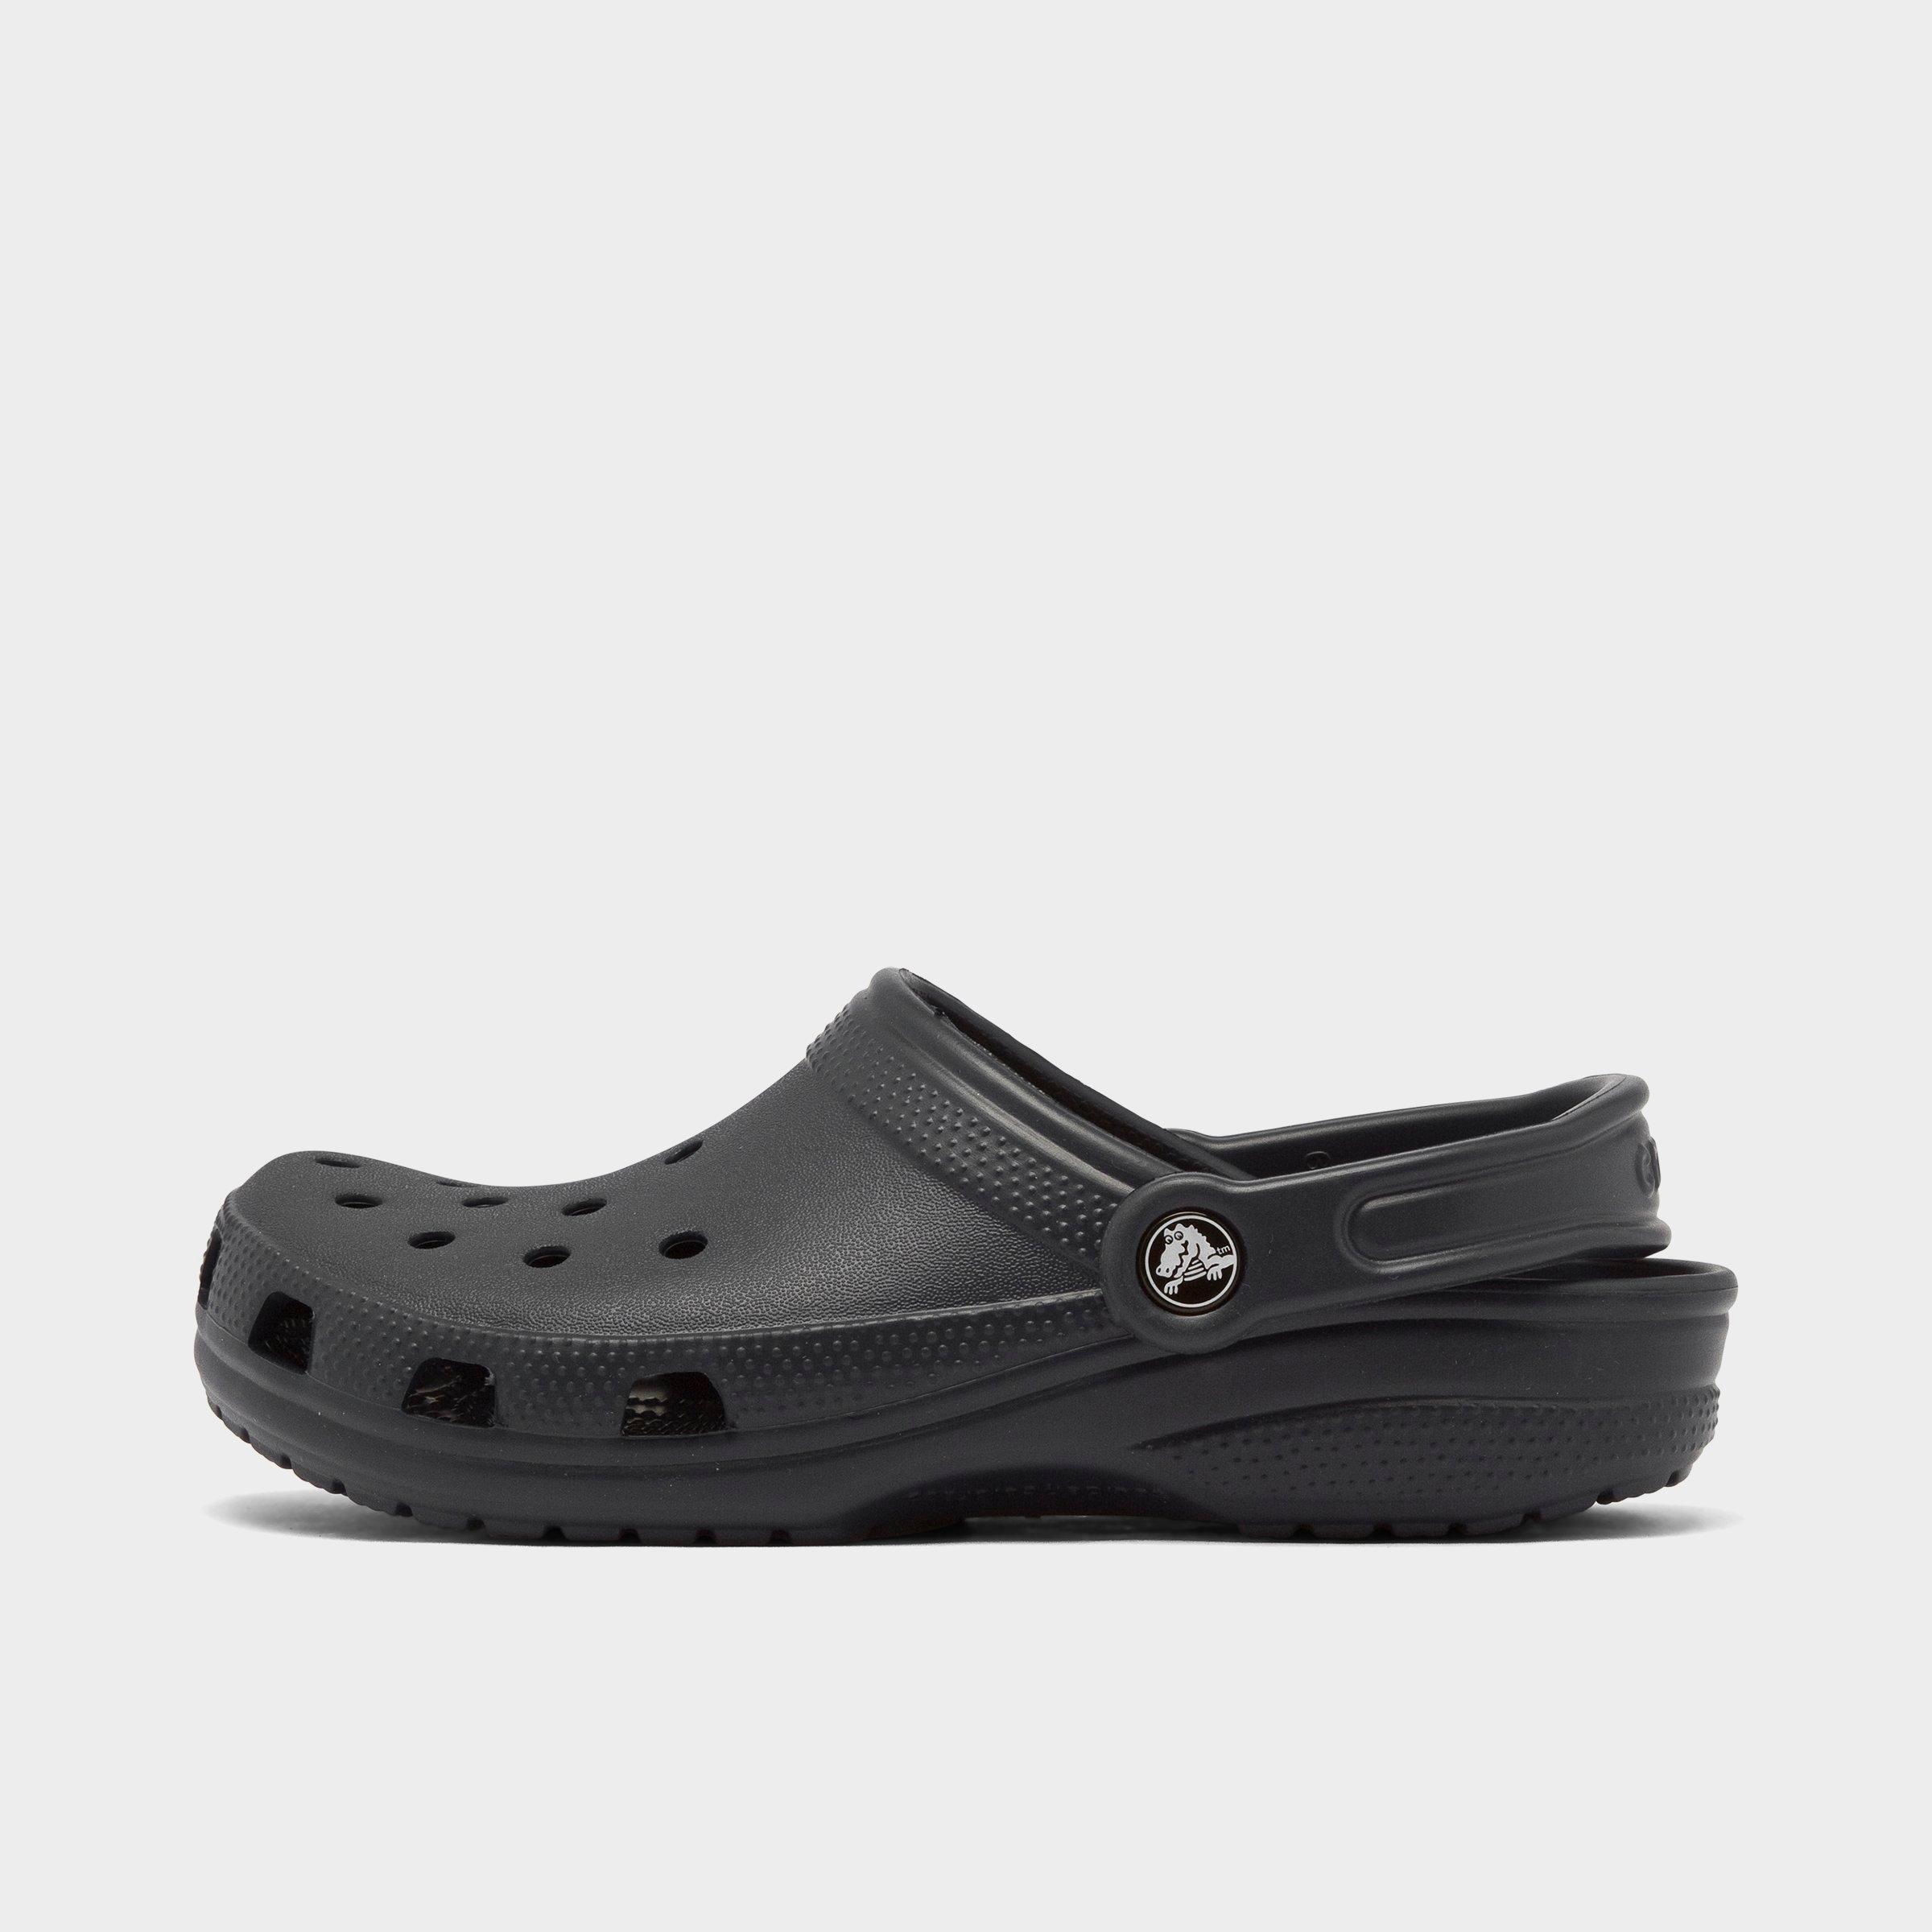 do croc shoes run big